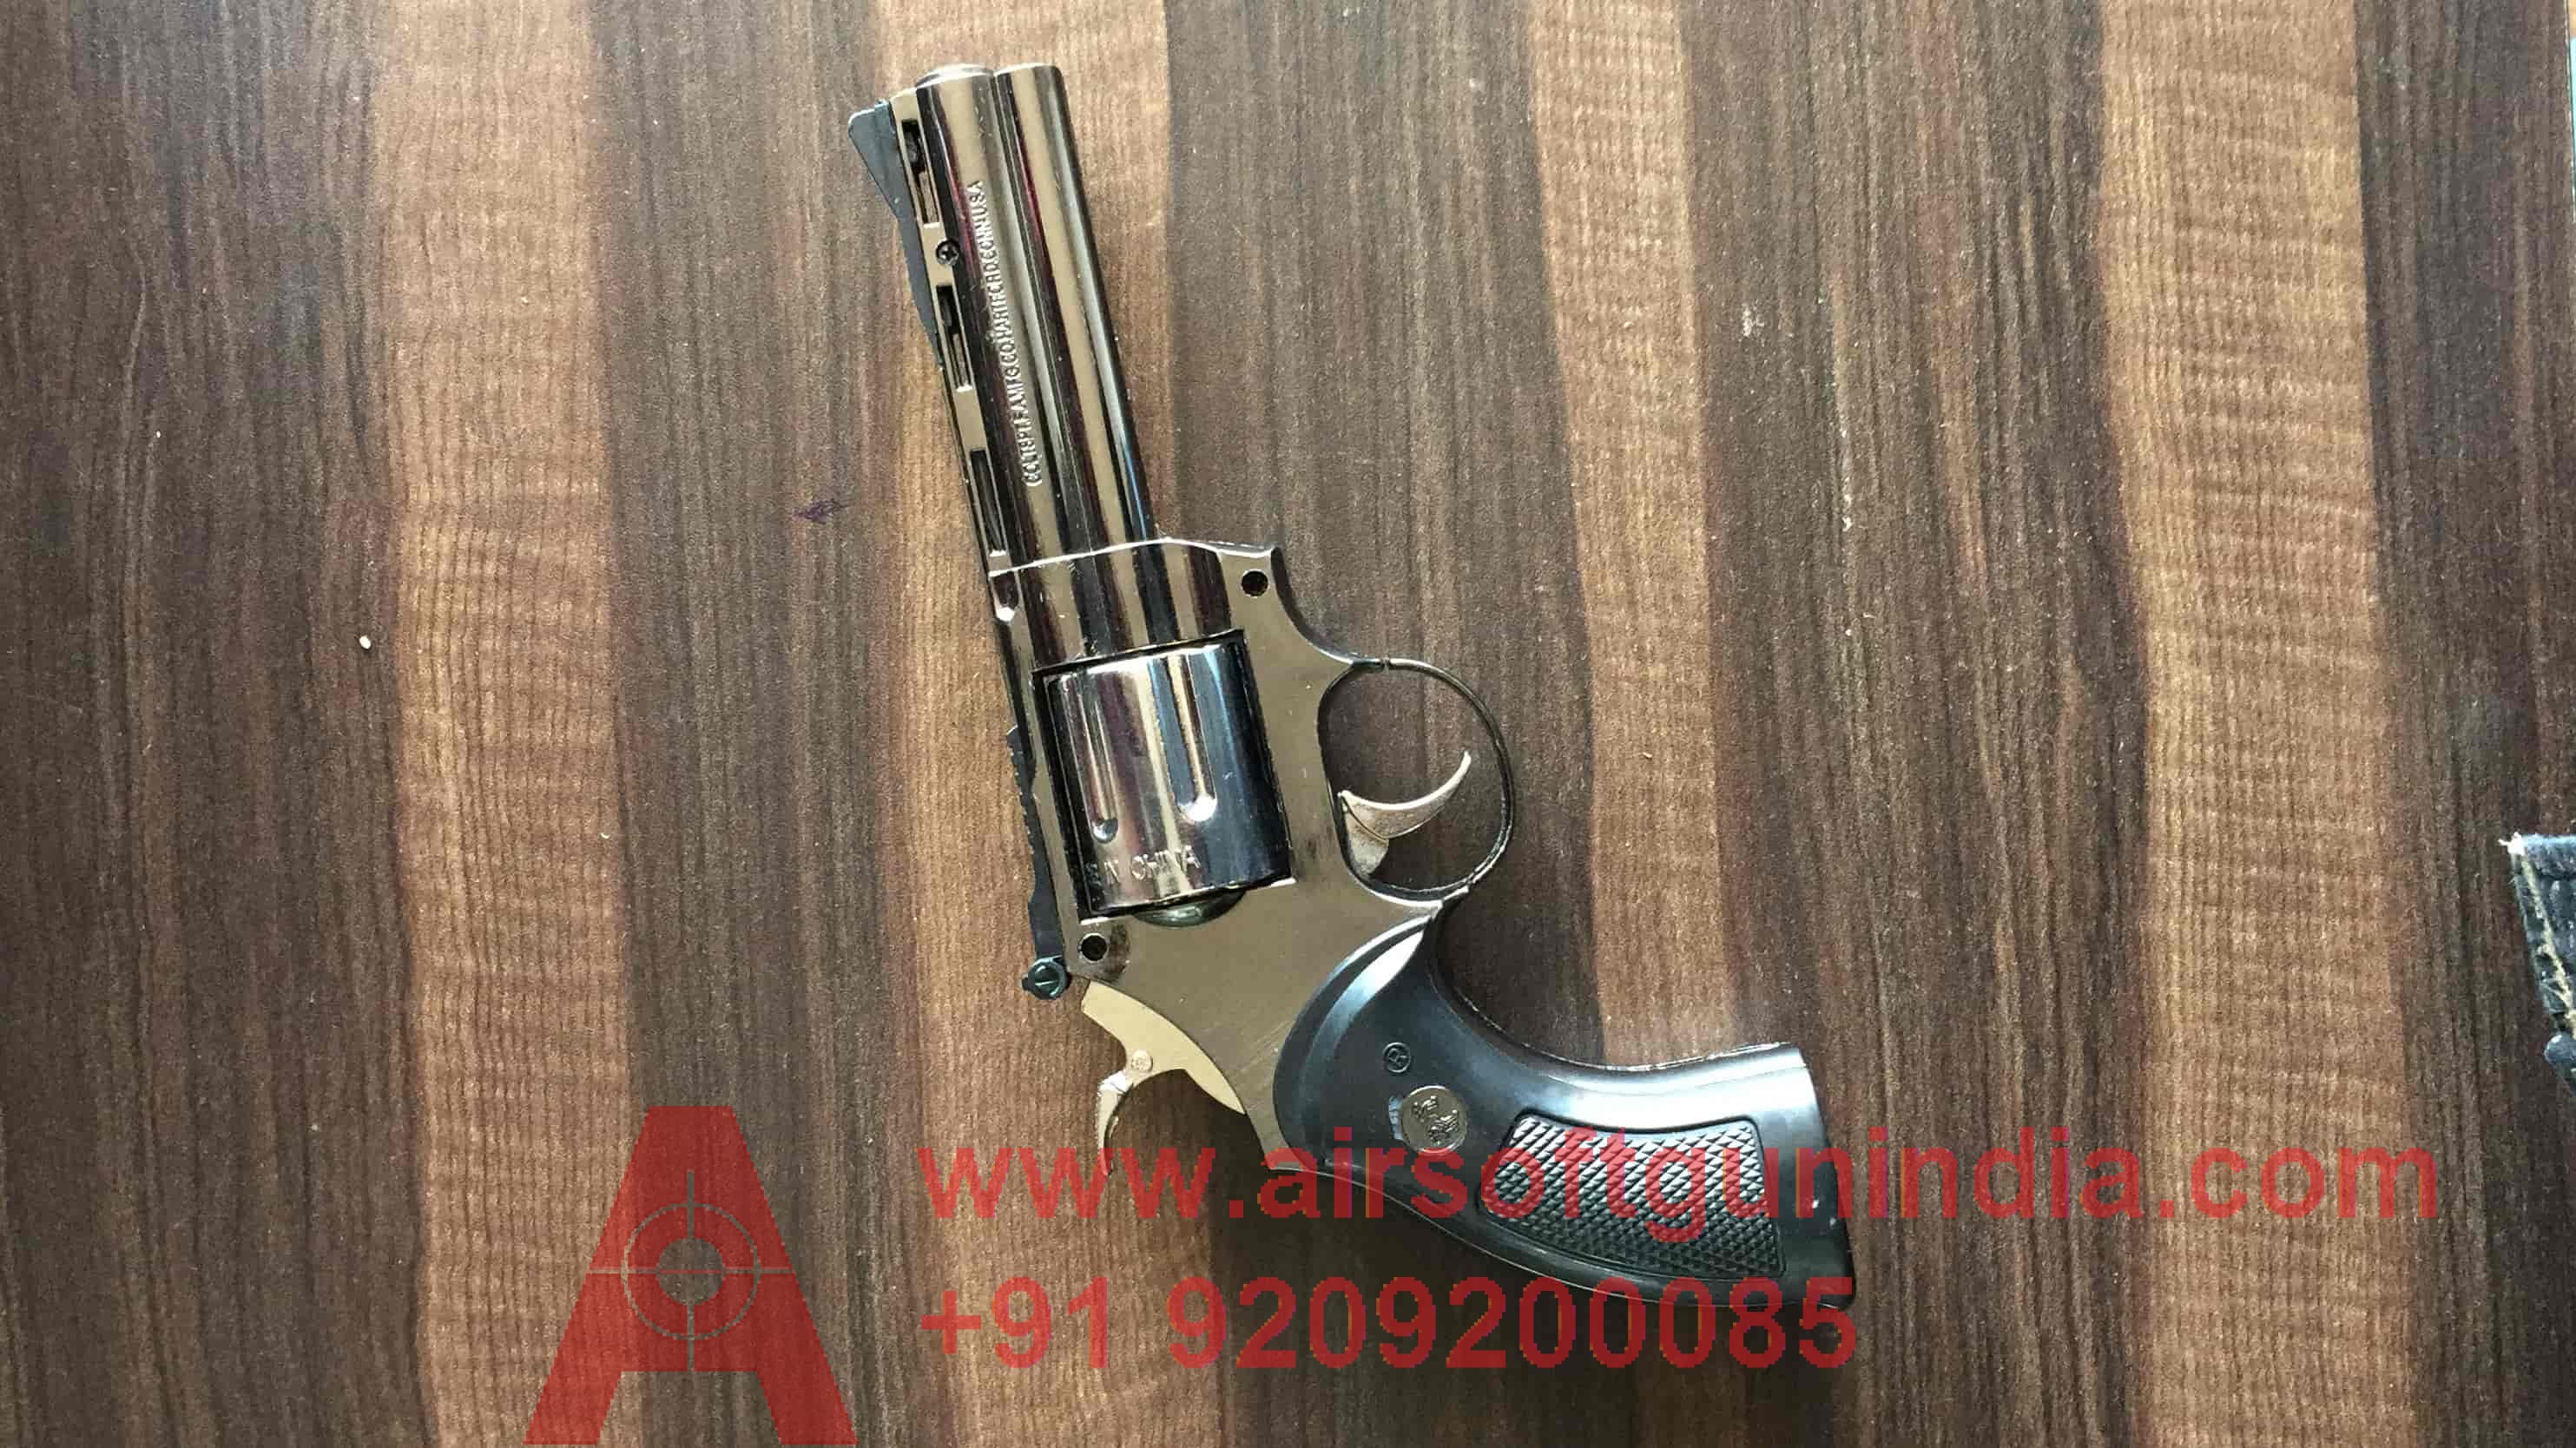 Python 357 Magnum Cigarette Lighter Revolver  In India